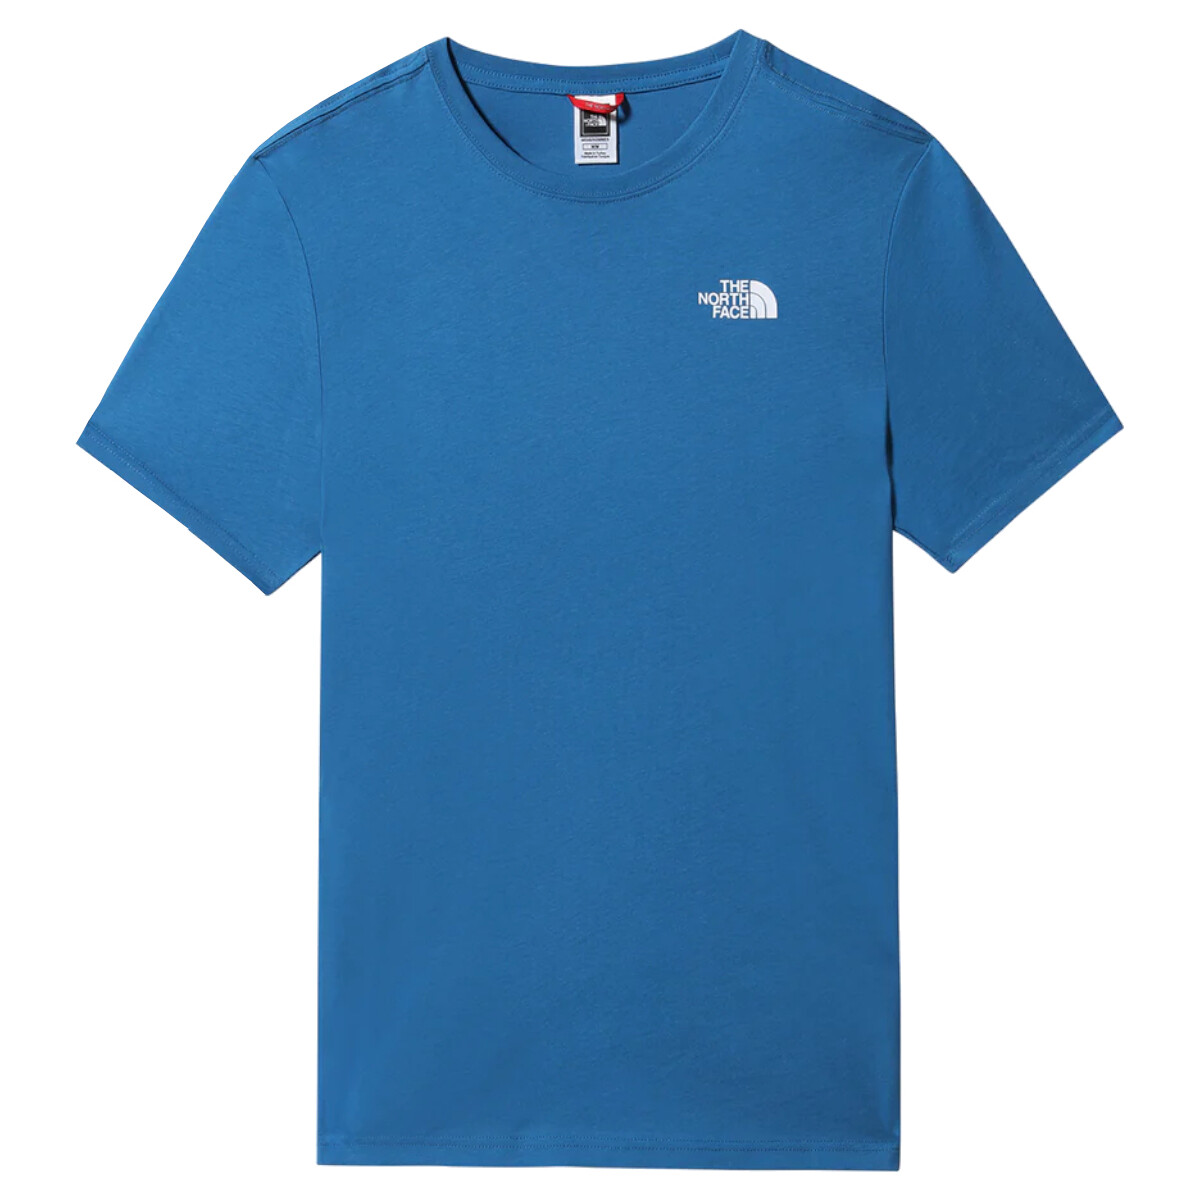 Vêtements Homme T-shirts manches courtes The North Face NF0A87NV Bleu